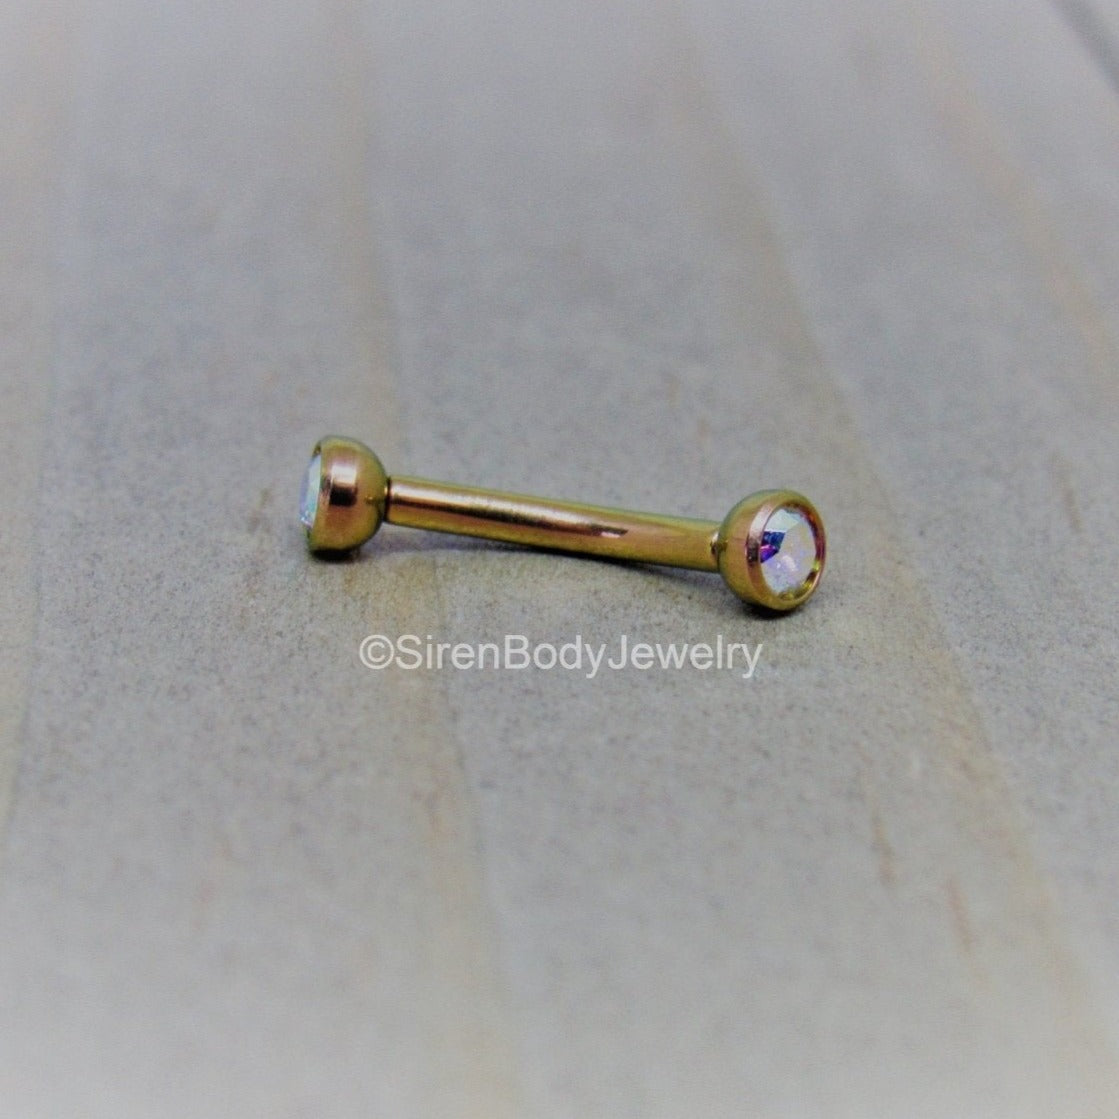 16g titanium curved barbell 3mm aurora  borealis gemstones rook daith earring